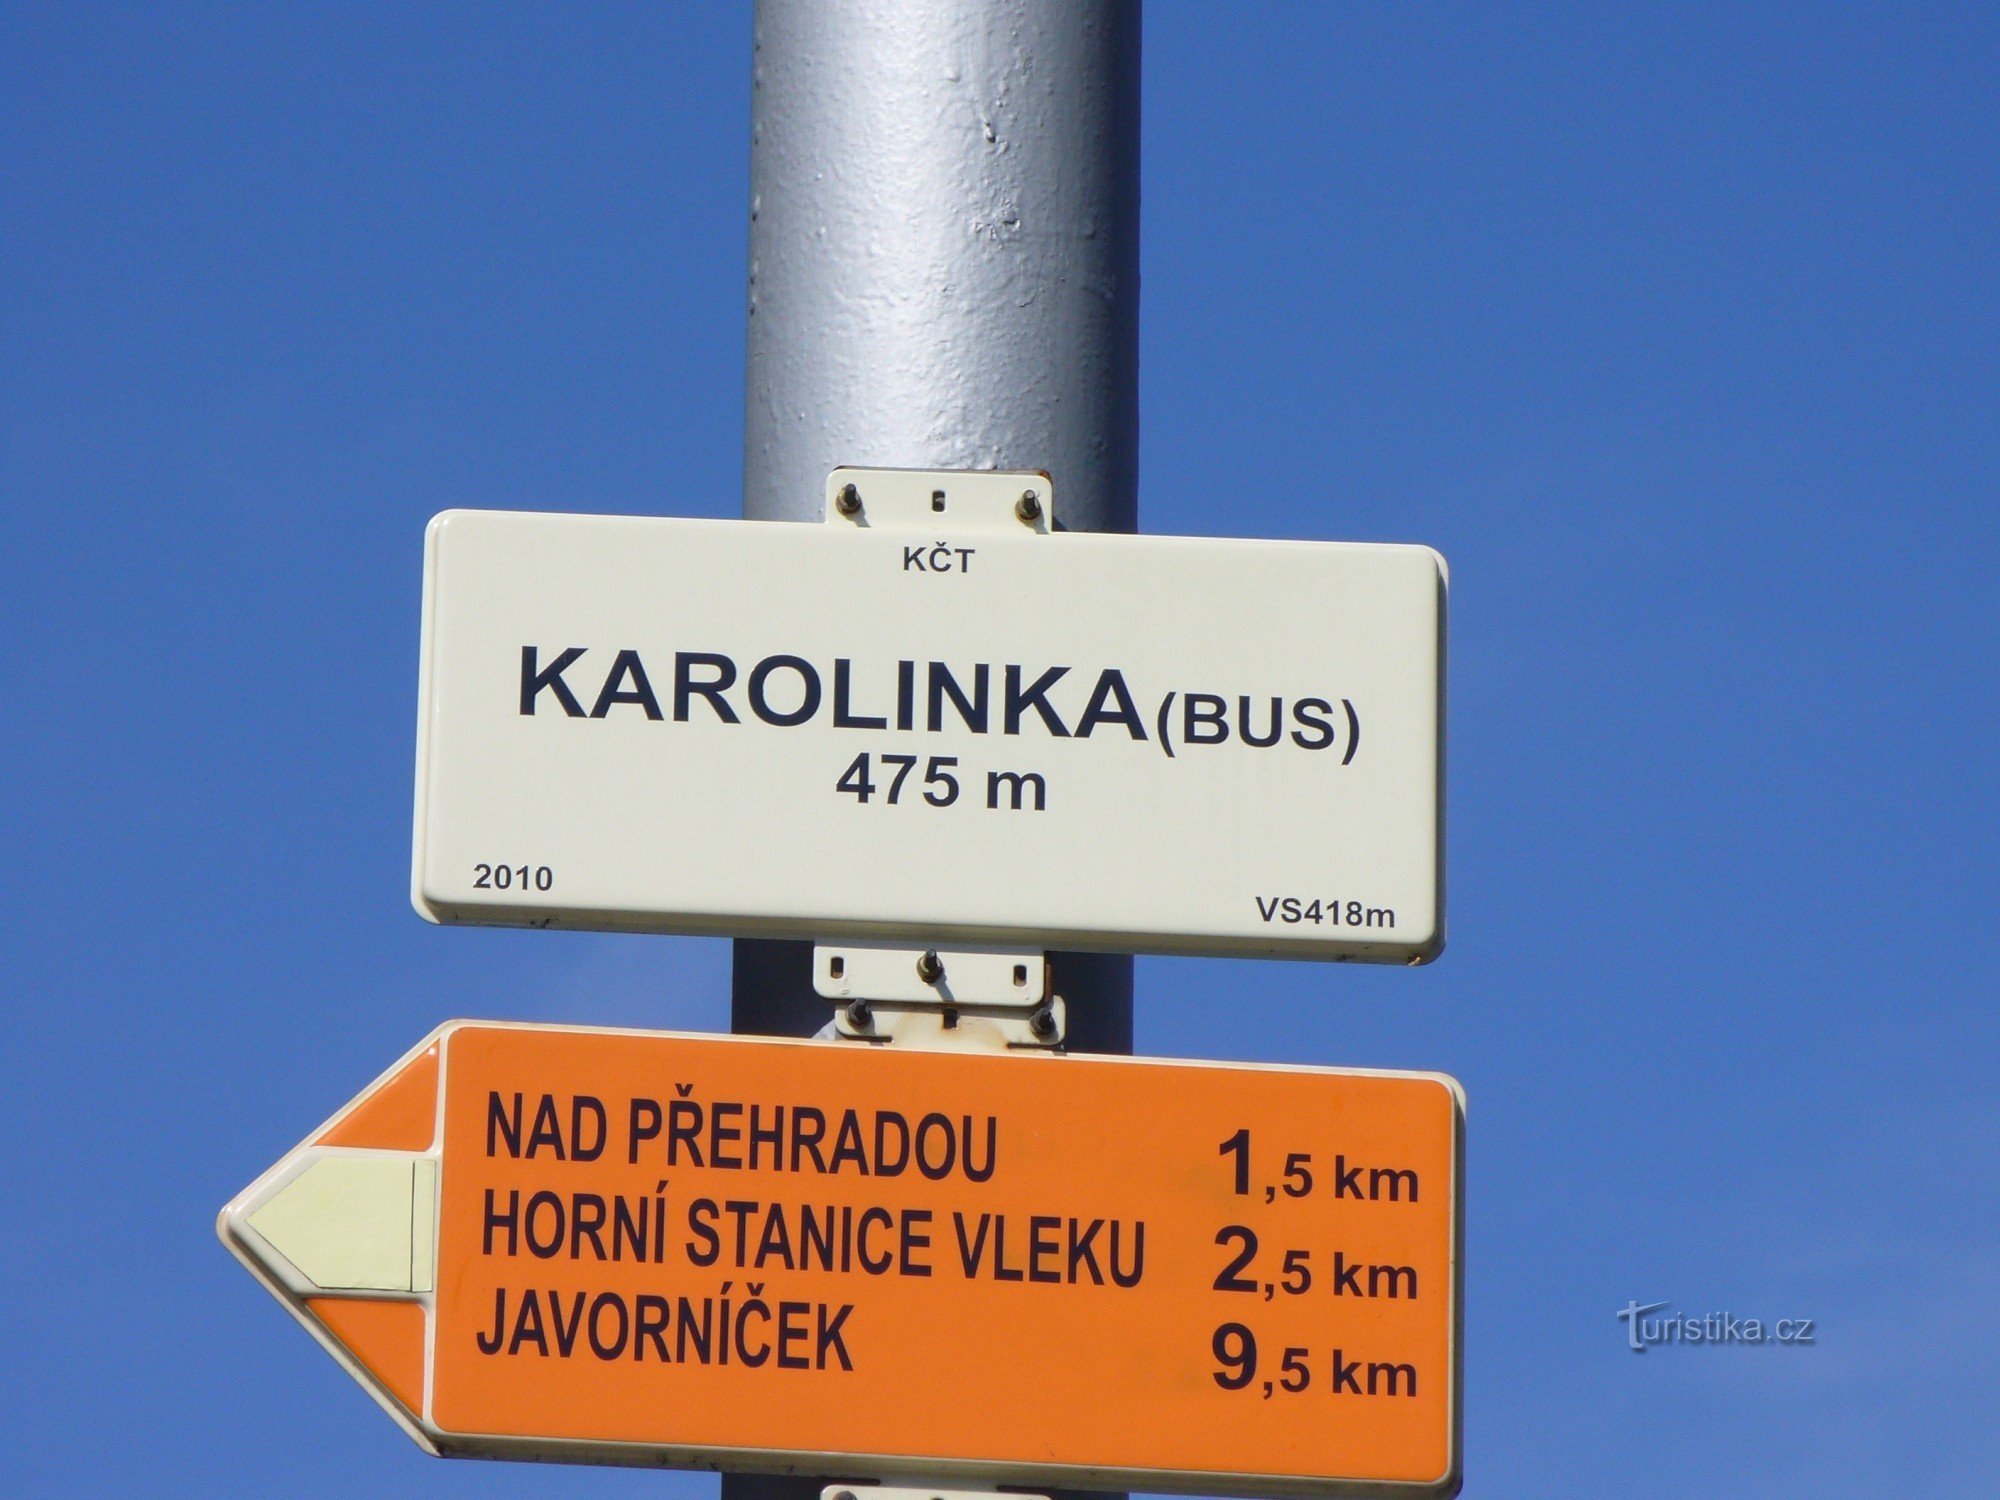 Primul indicator - Karolinka (autobuz)